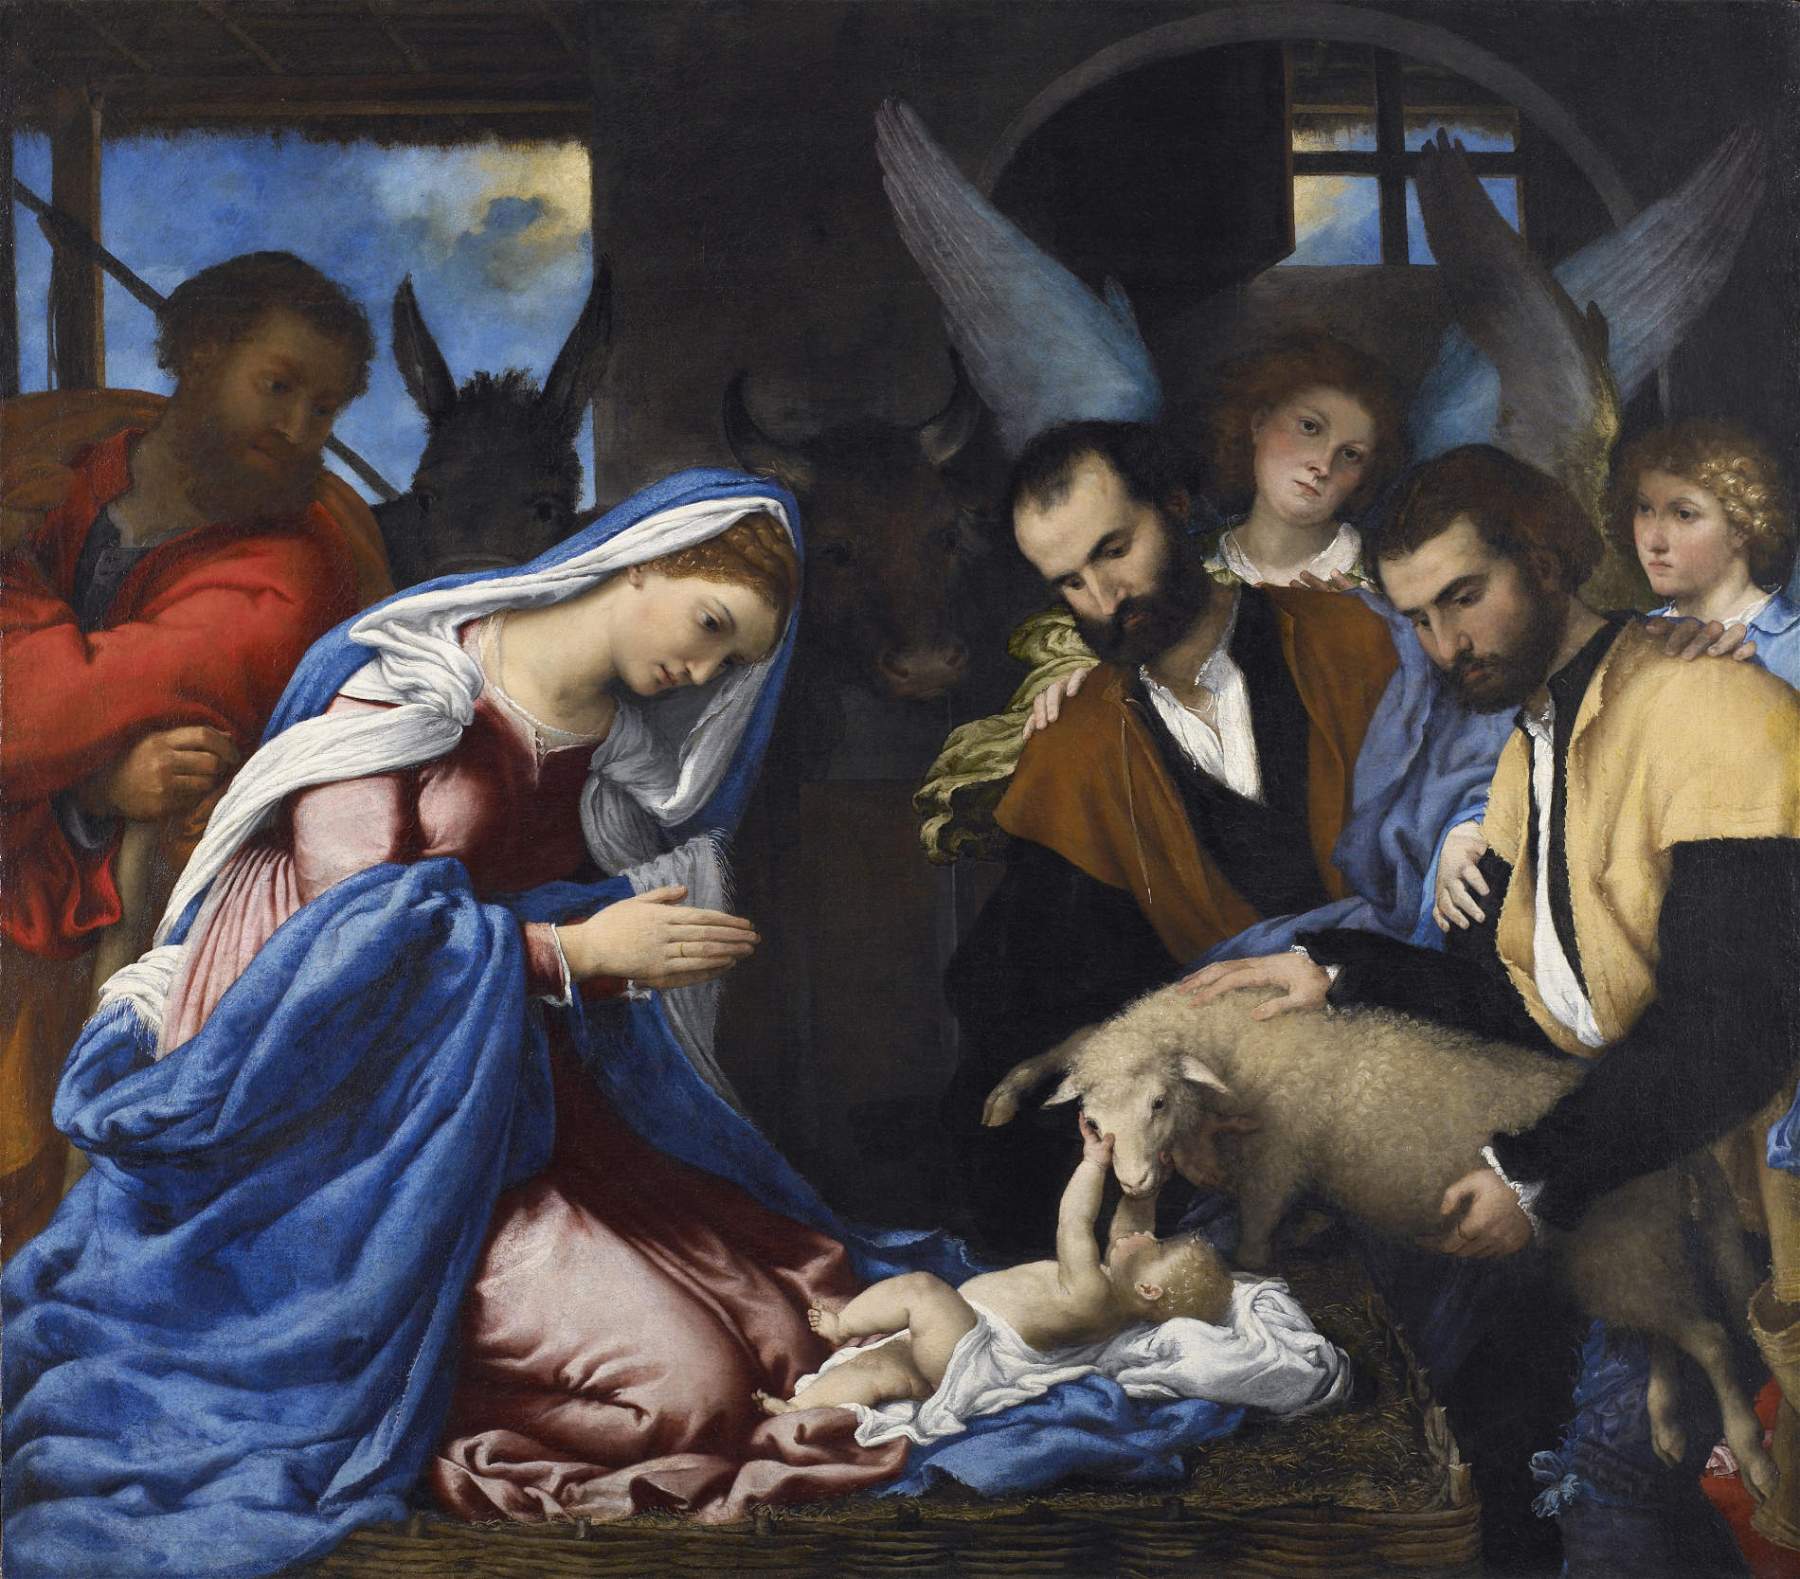  Brescia, à la Pinacothèque Tosio Martinengo Lorenzo Lotto et les maîtres brescians du XVIe siècle